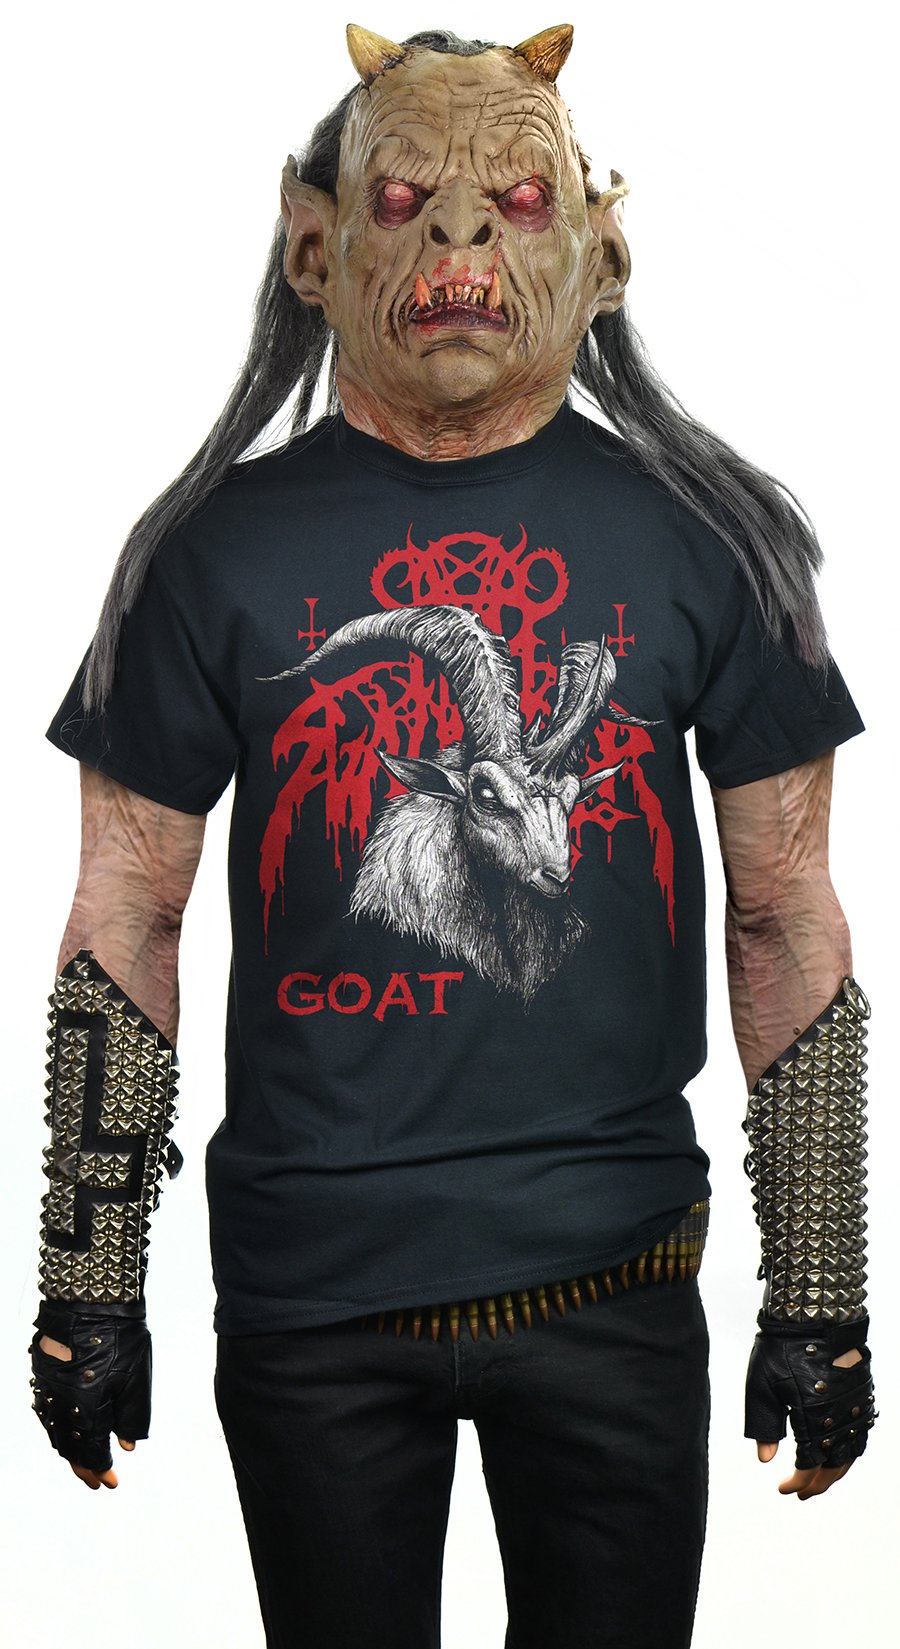 NUNSLAUGHTER - Goat (New Art)